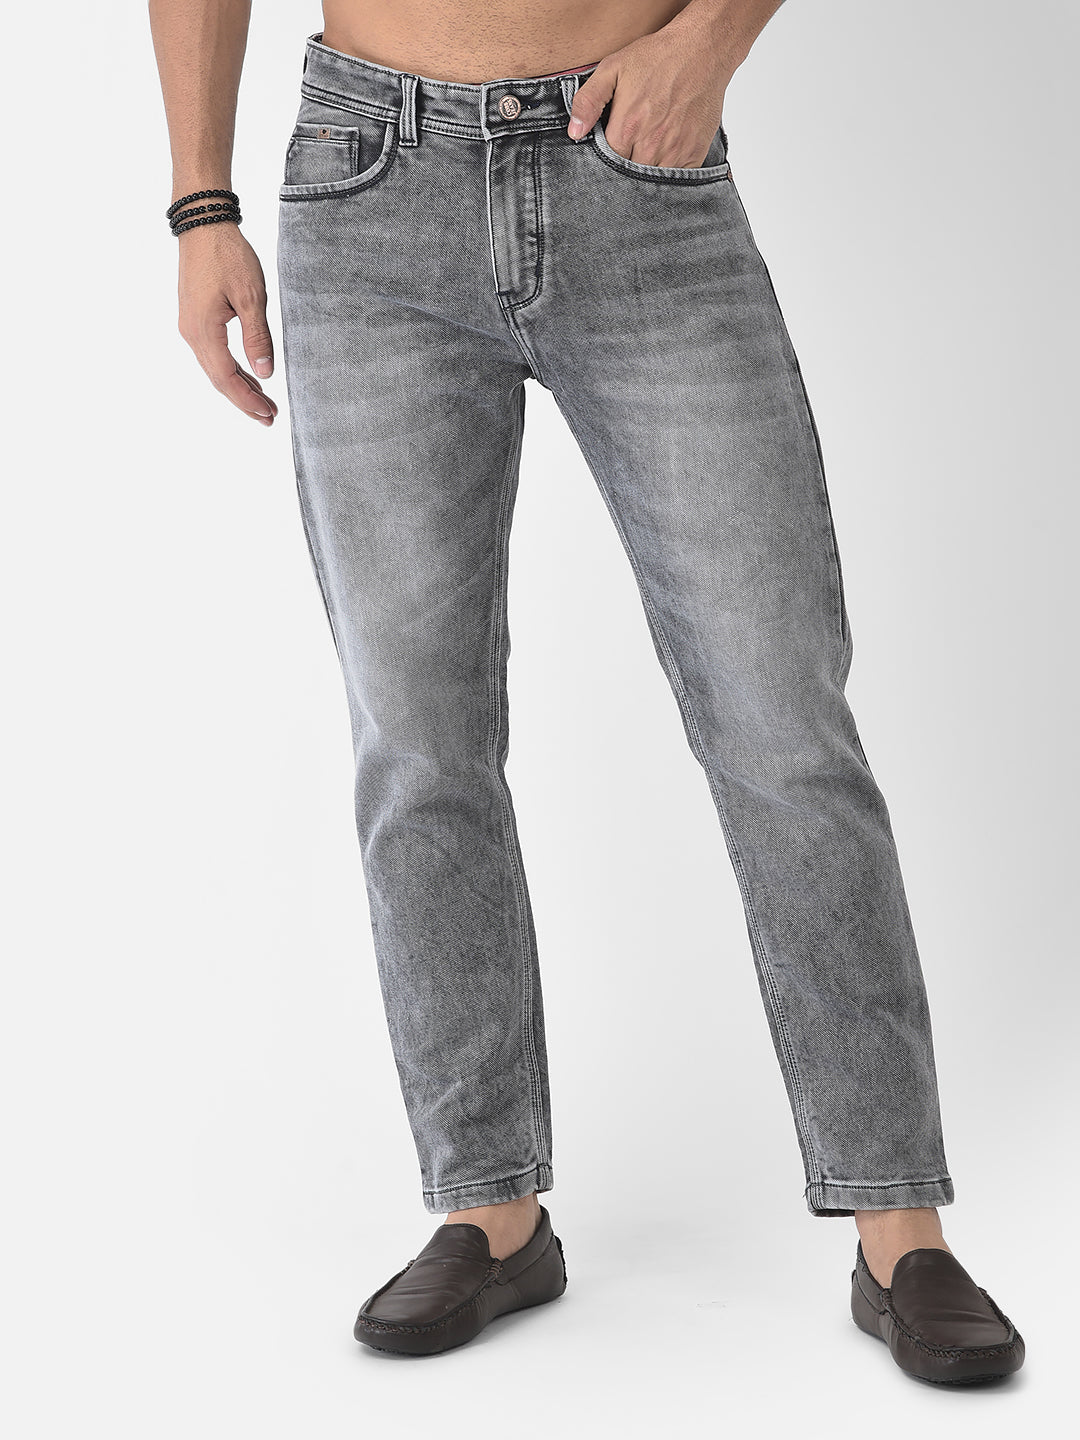 Cobb Grey Narrow Fit Jeans Grey